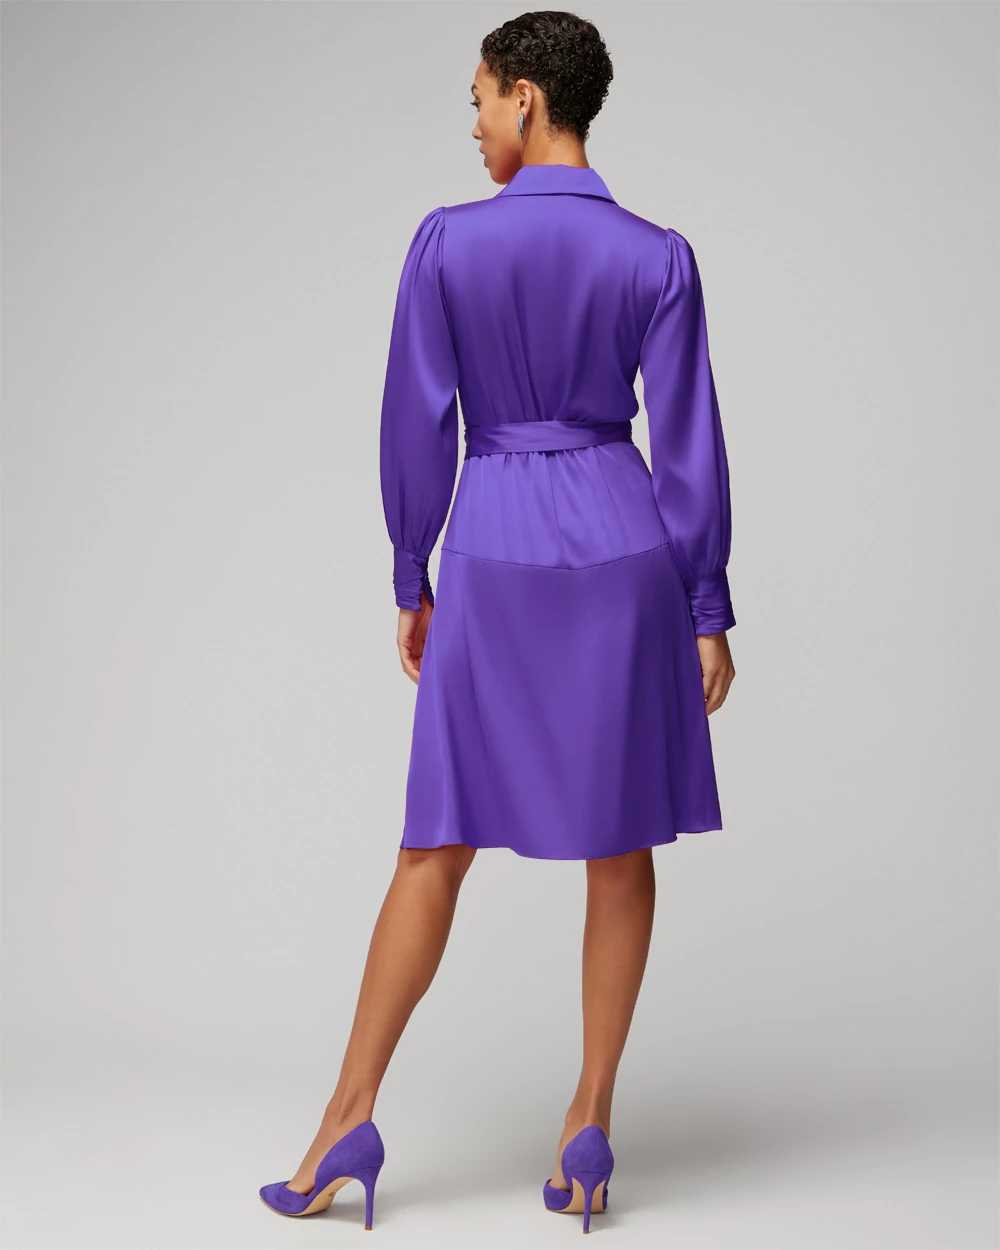 Petite Long Sleeve Satin Wrap Mini Dress click to view larger image.